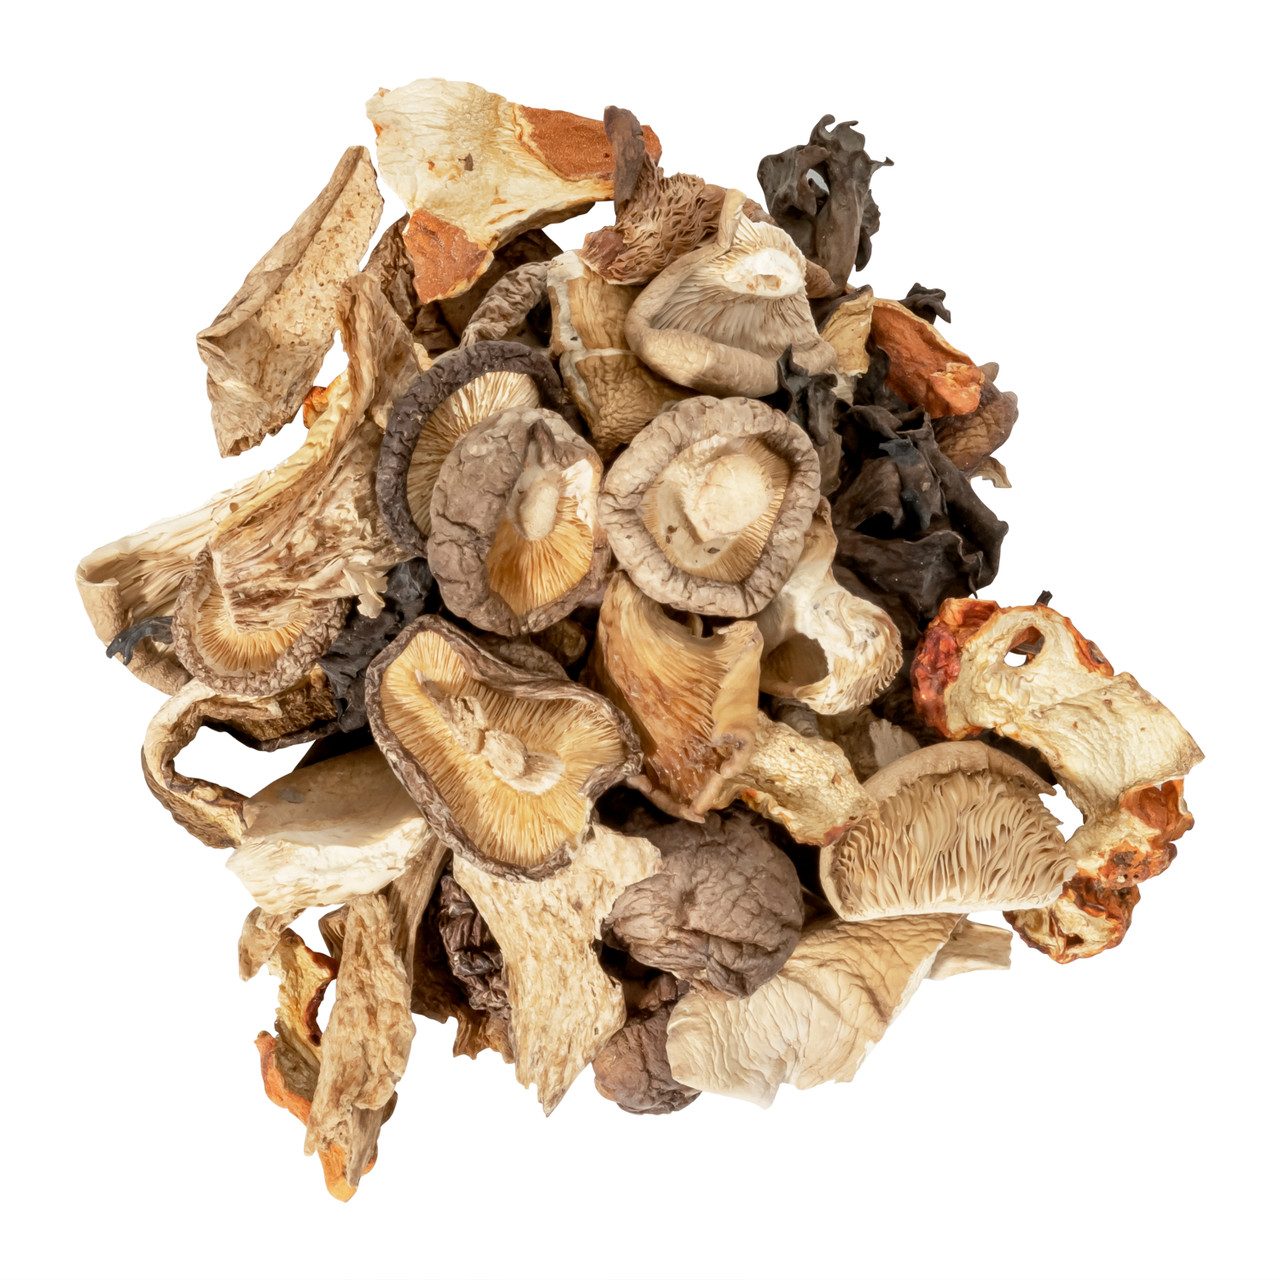 Assorted dried mushrooms